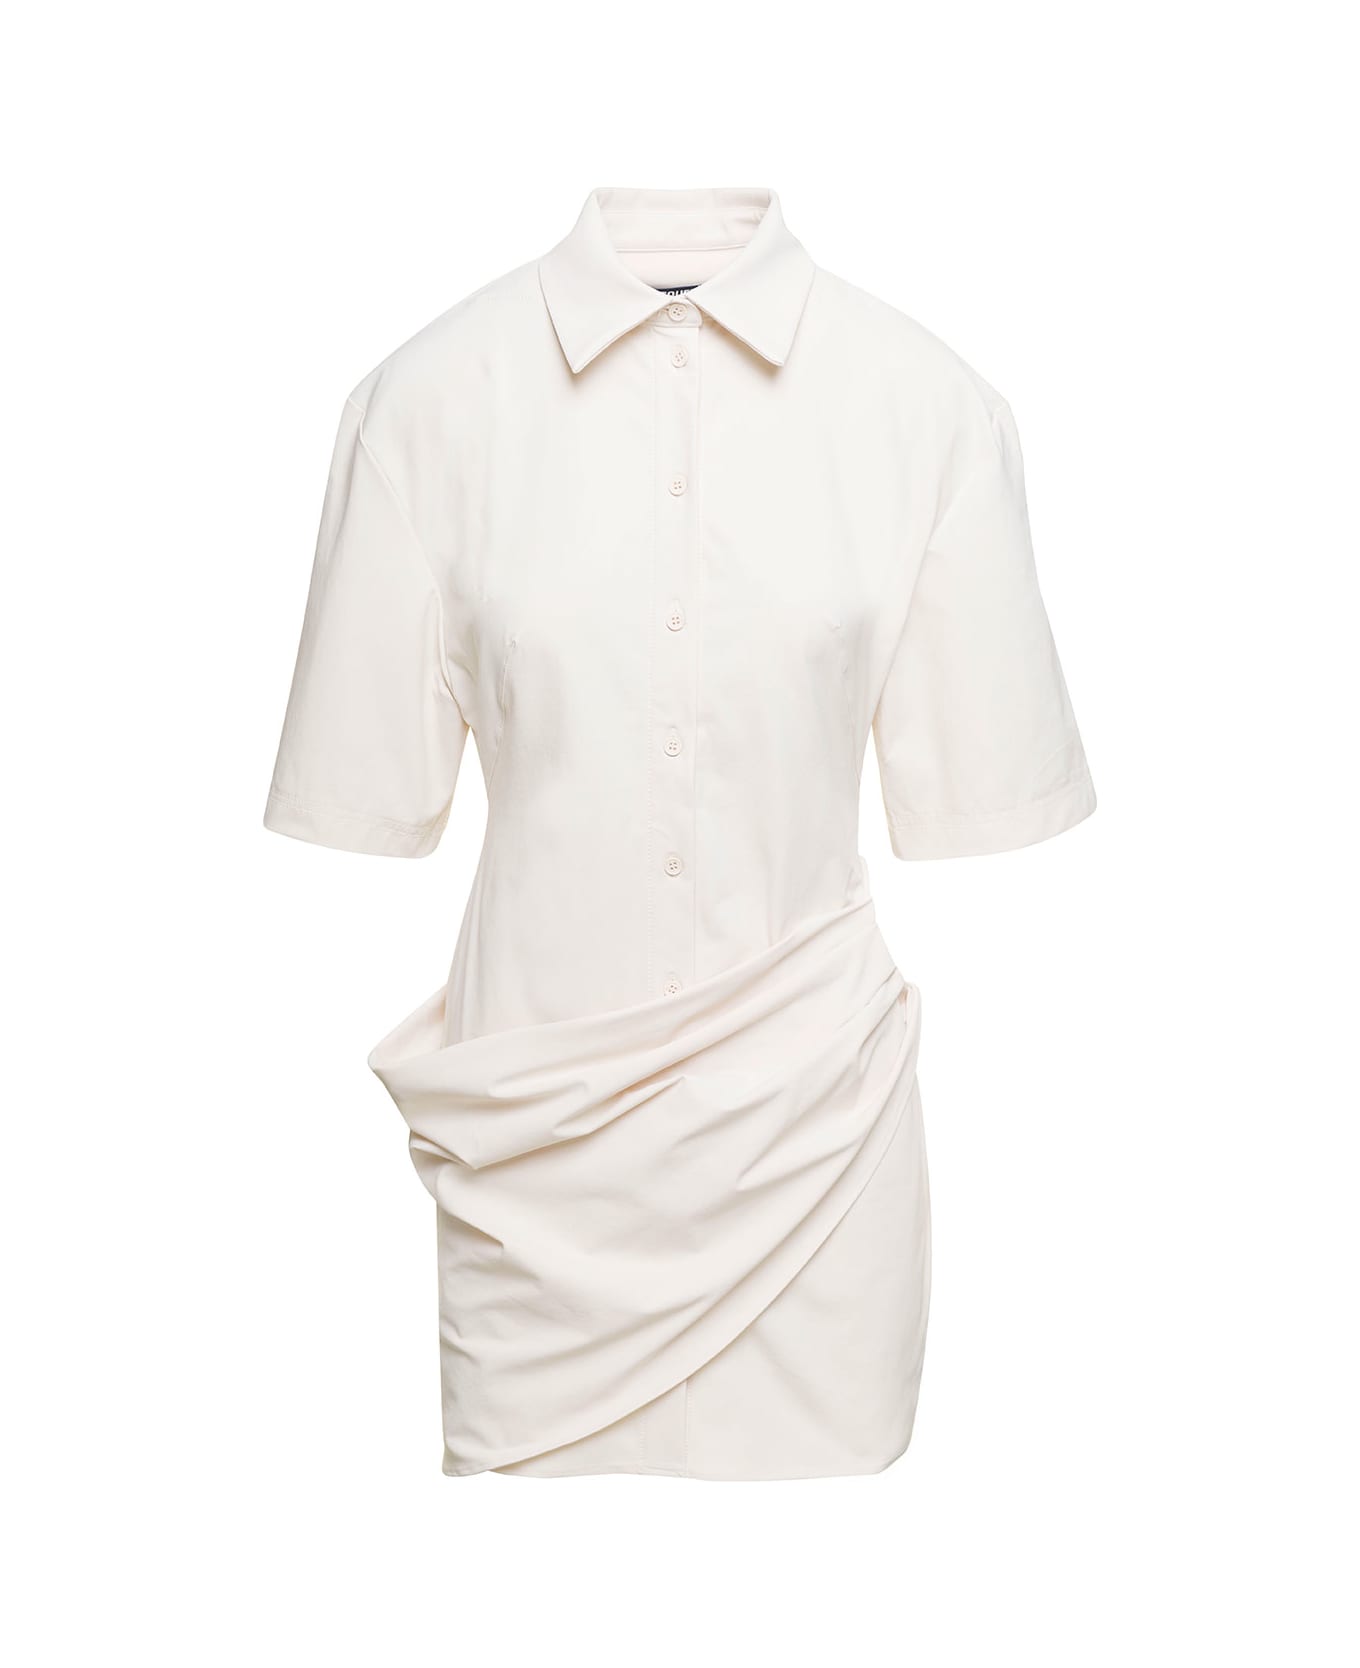 Jacquemus White Shirt Dress La Robe Camisa In Cotton Blend Woman - White